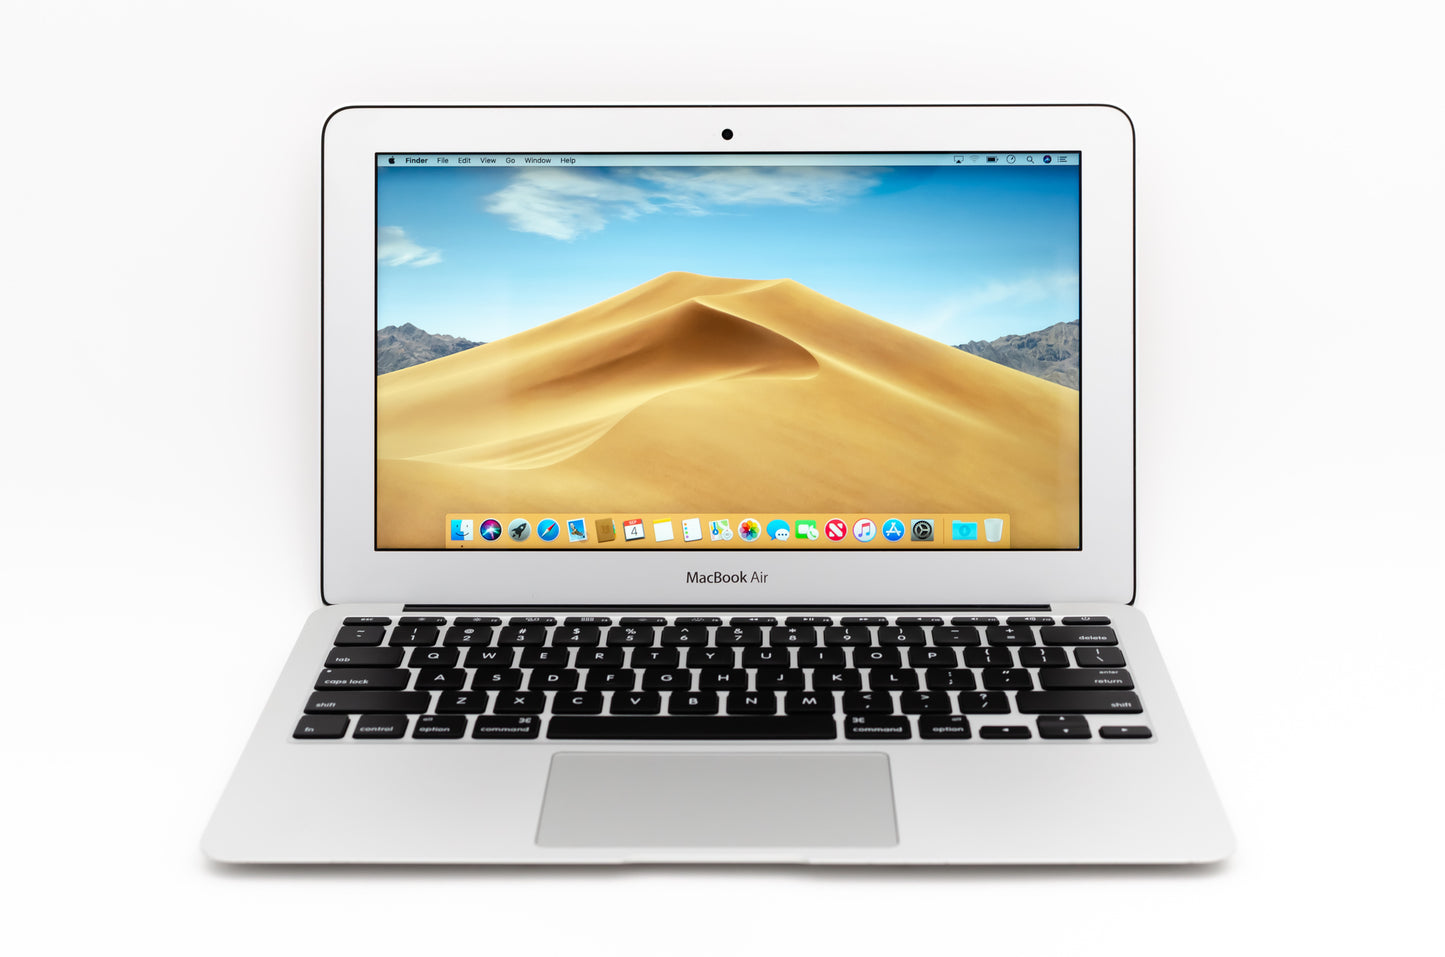 apple-mid-2011-11.6-inch-macbook-air-a1370-aluminum-dci5 - 1.6ghz processor, 2gb ram, hd 3000 - 348mb gpu-mc968ll/a-1